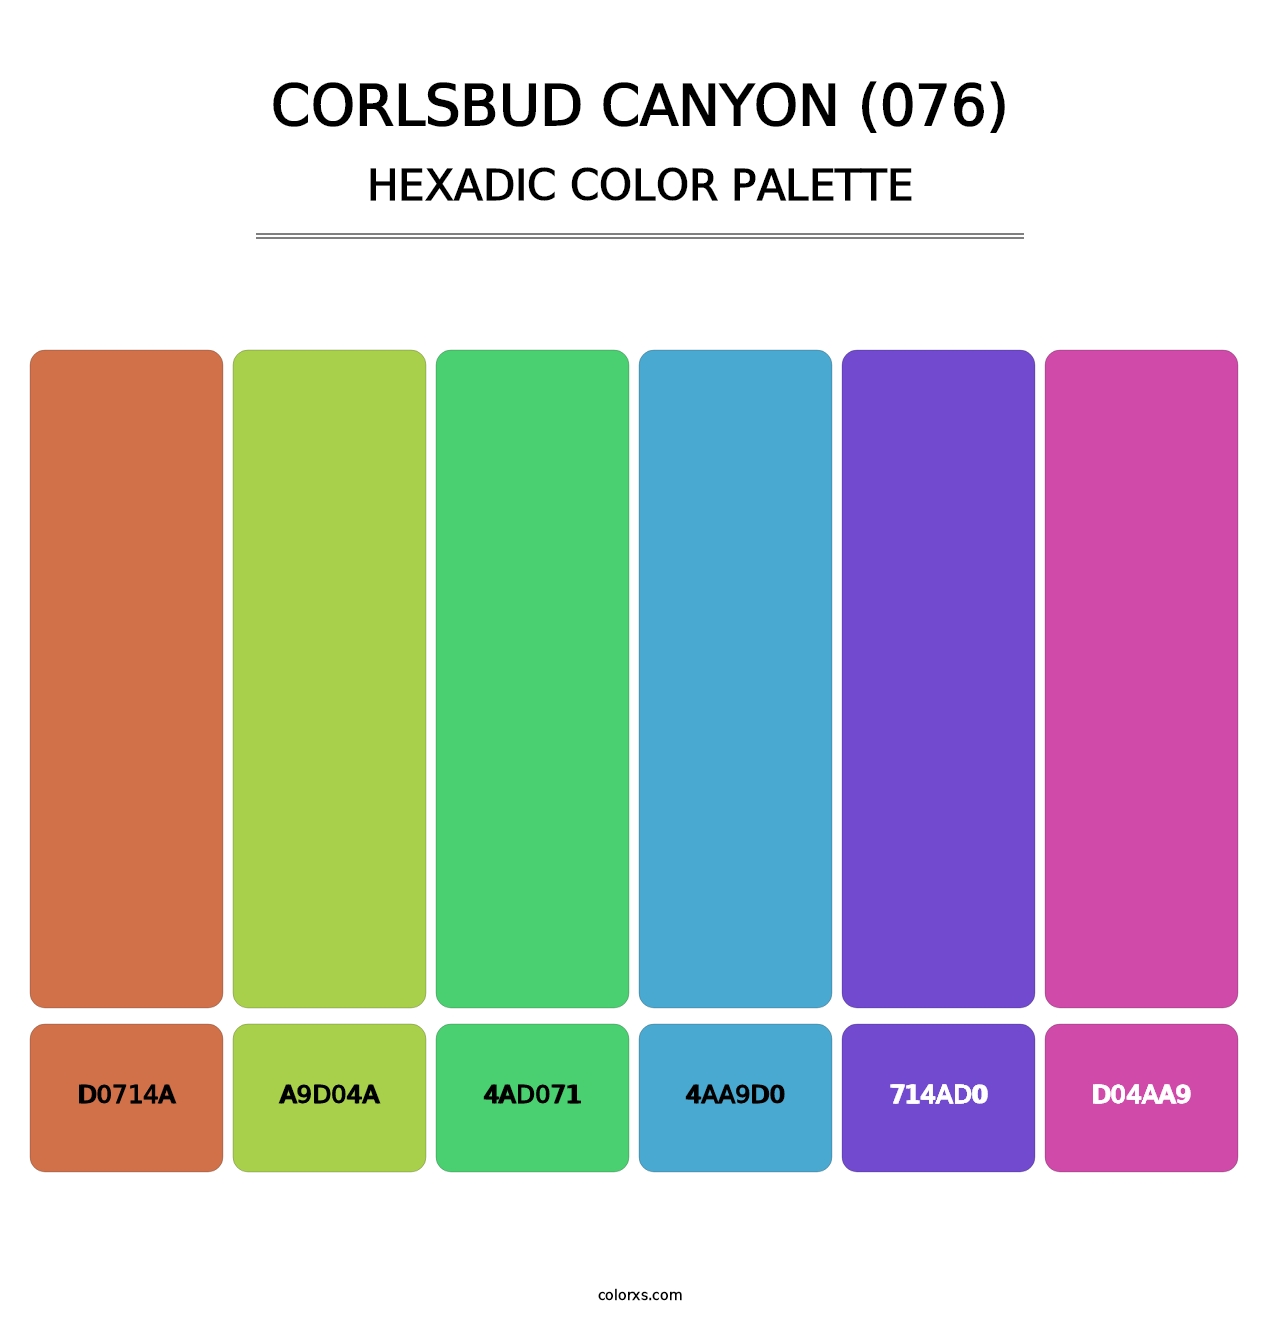 Corlsbud Canyon (076) - Hexadic Color Palette